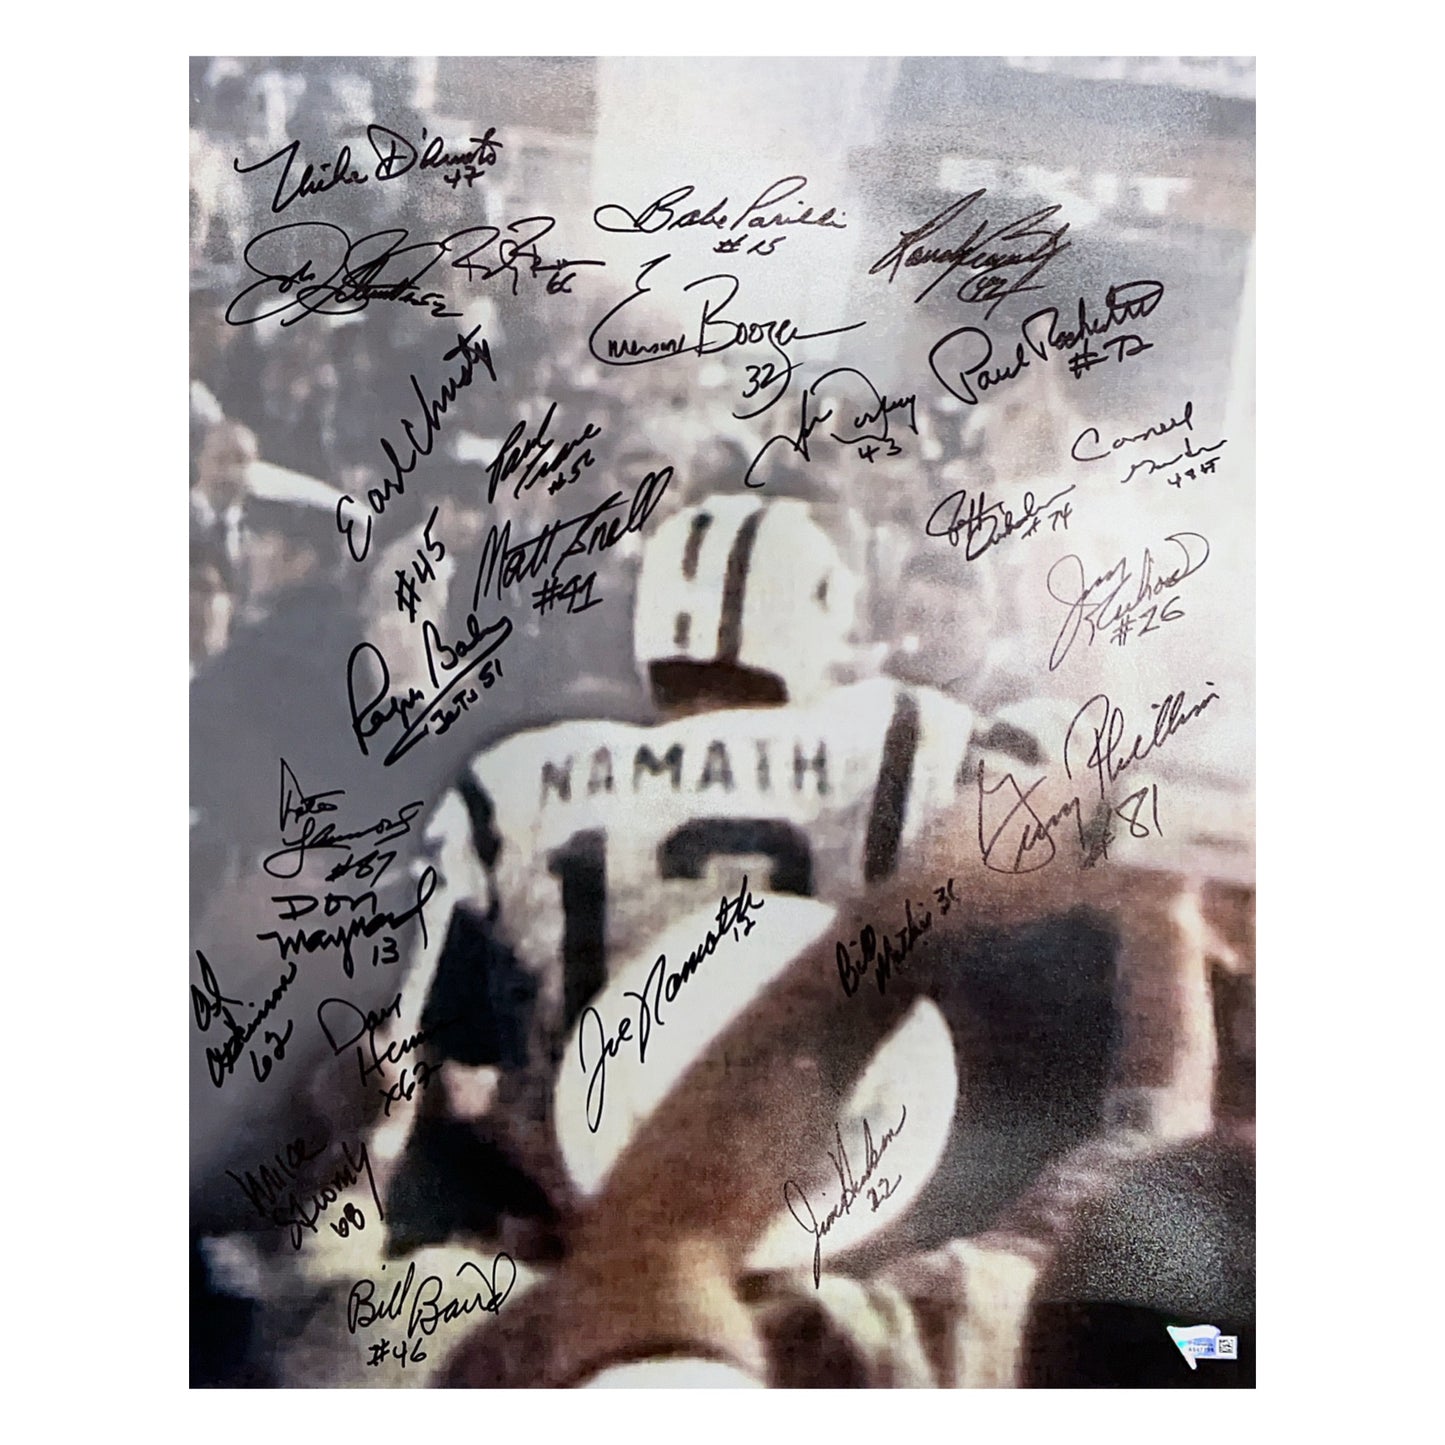 1969 New York Jets Autographed Super Bowl Namath Leaving Field 16x20 25 Autographs Including Namath, Maynard, Boozer & More Fanatics